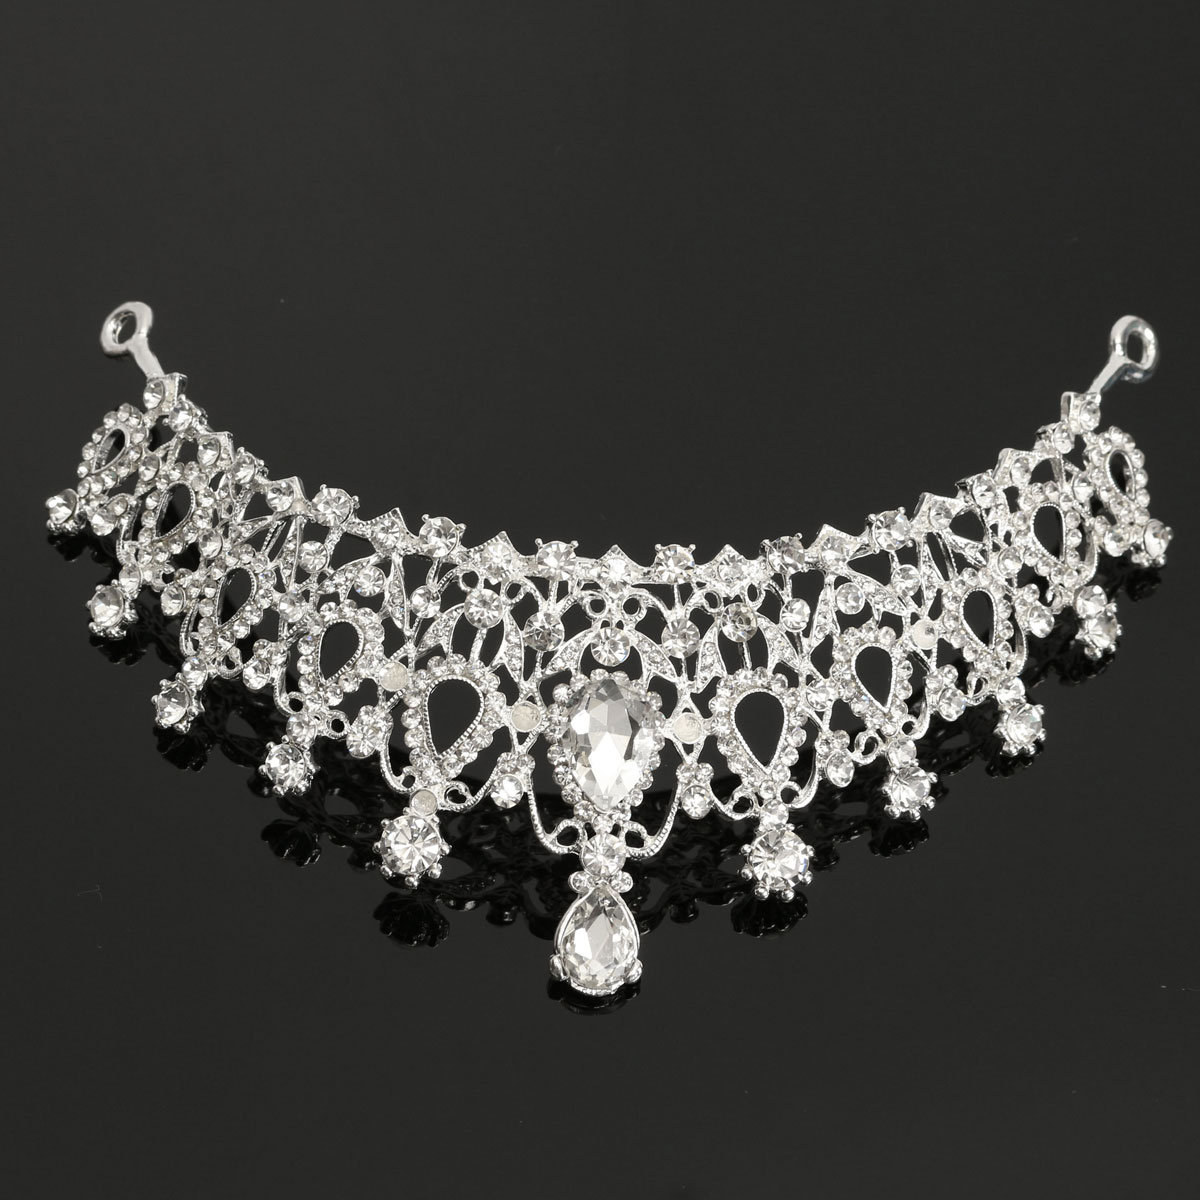 

Bride Rhinestone Crystal Tiara Crown Princess Queen Wedding Bridal Headpiece Hair Accessory